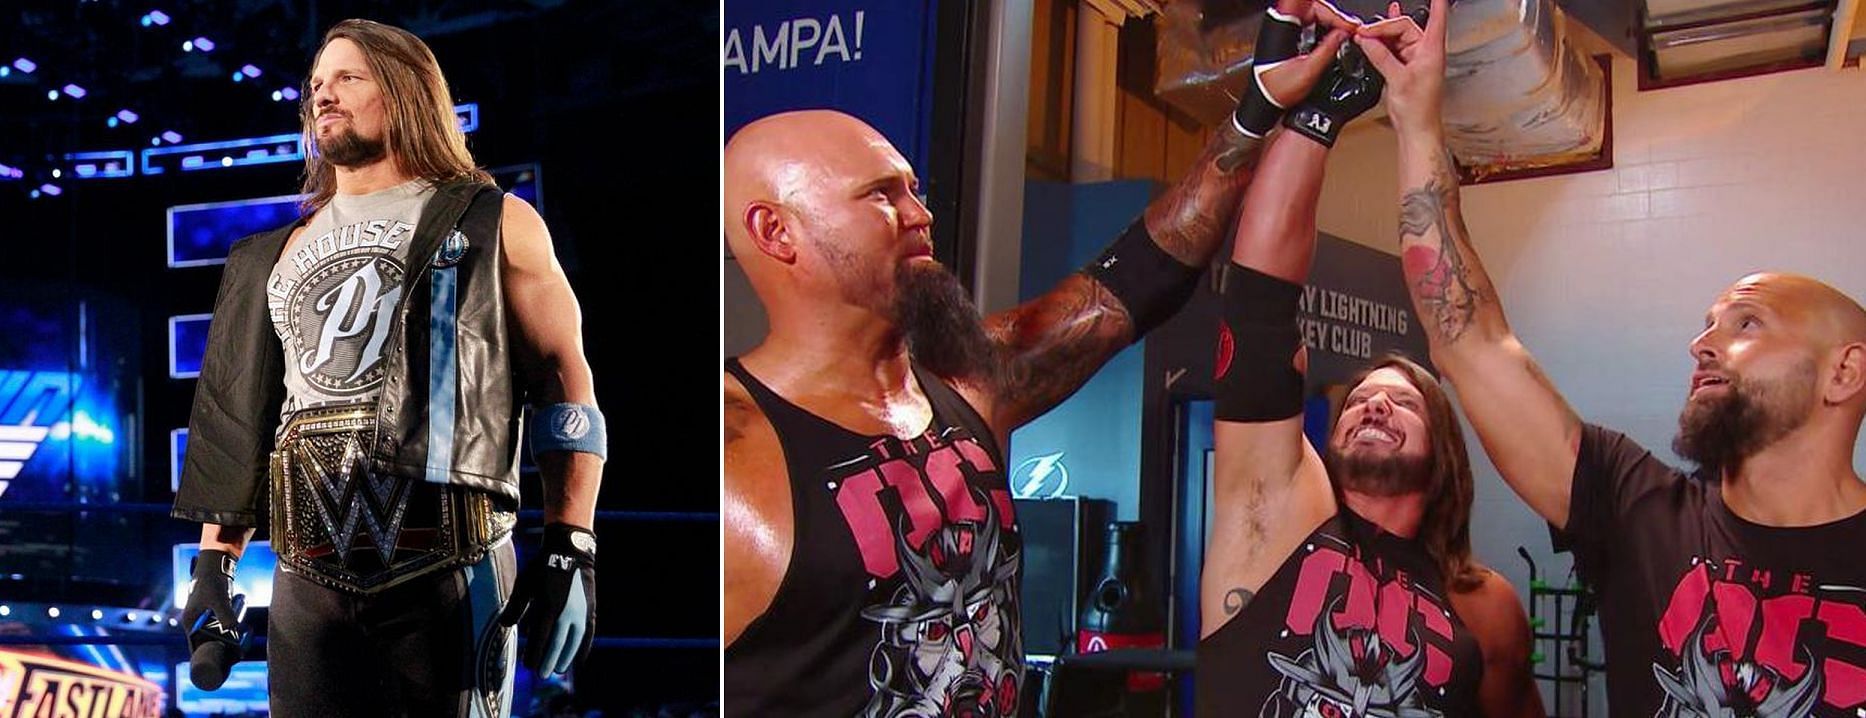 When will AJ Styles return to WWE?